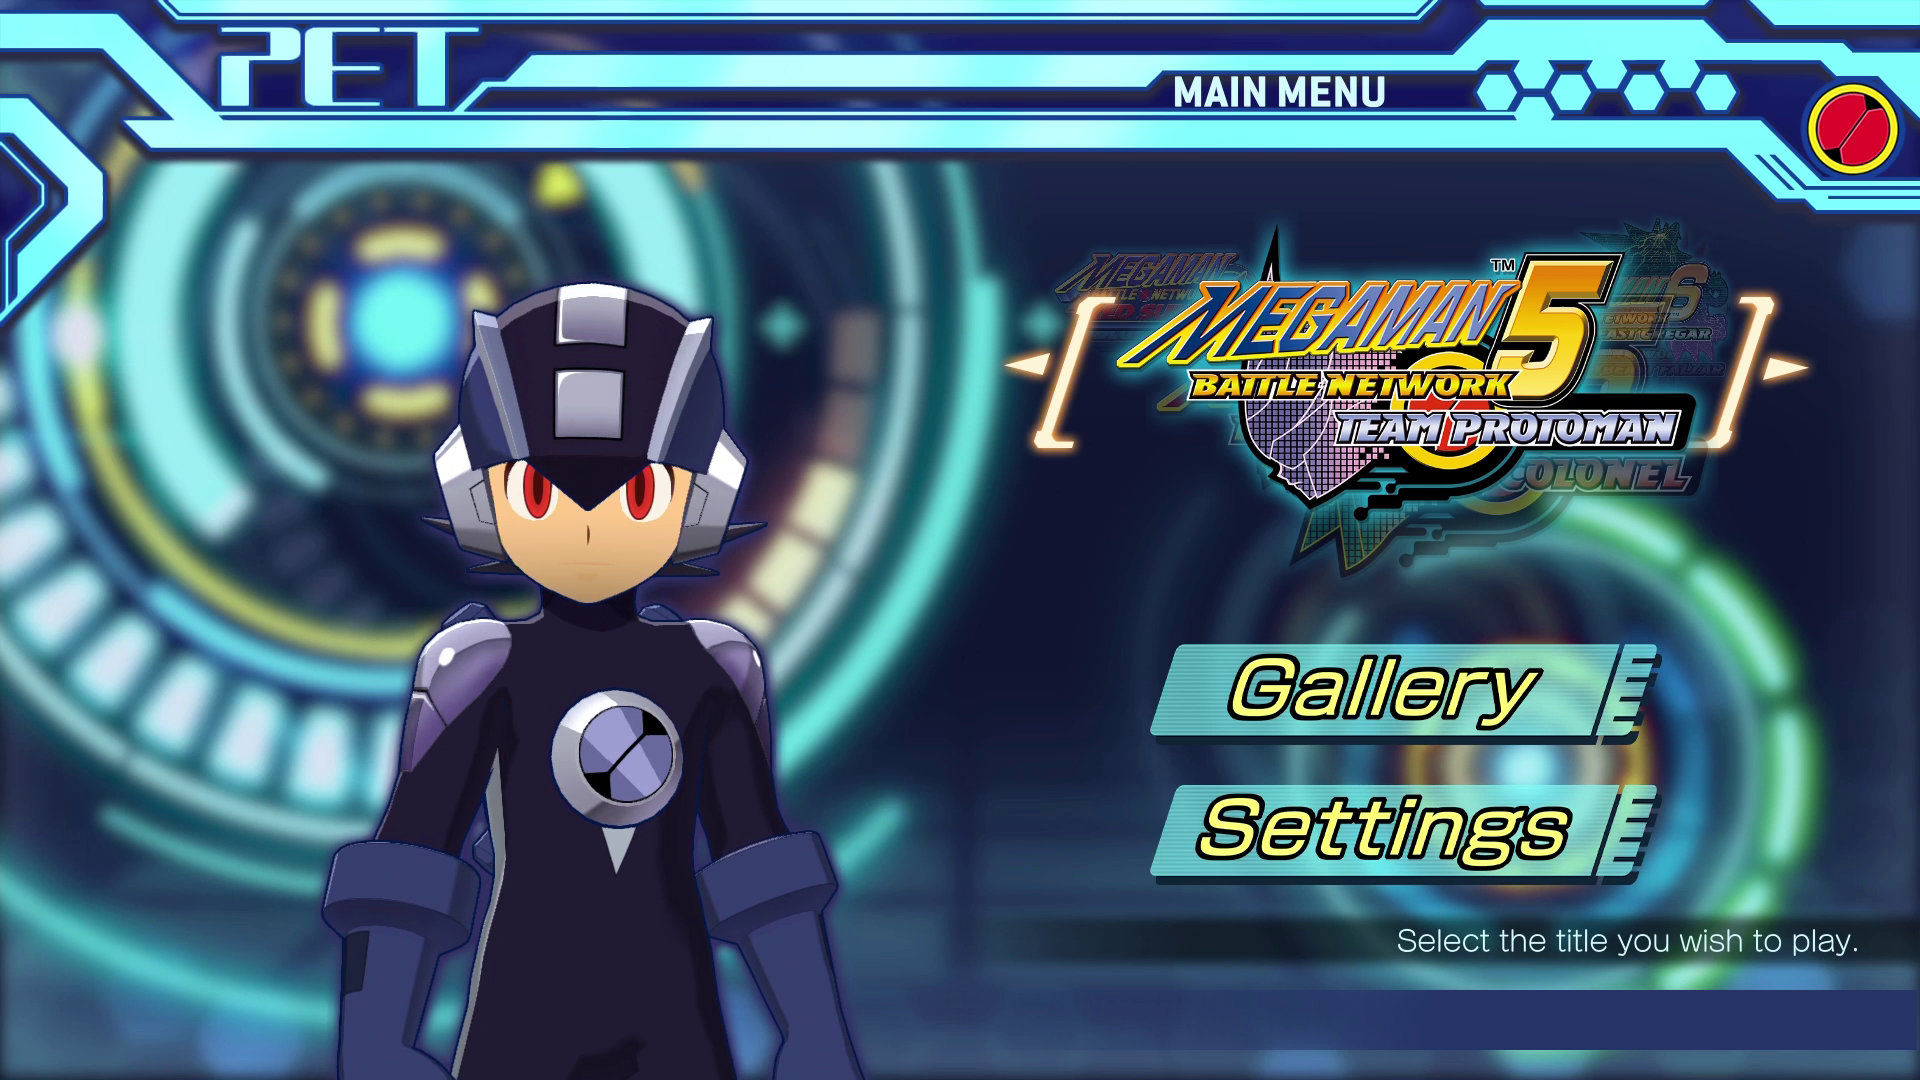 Mega Man Battle Network Legacy Collection I Midia Digital PS4 - R10GAMER